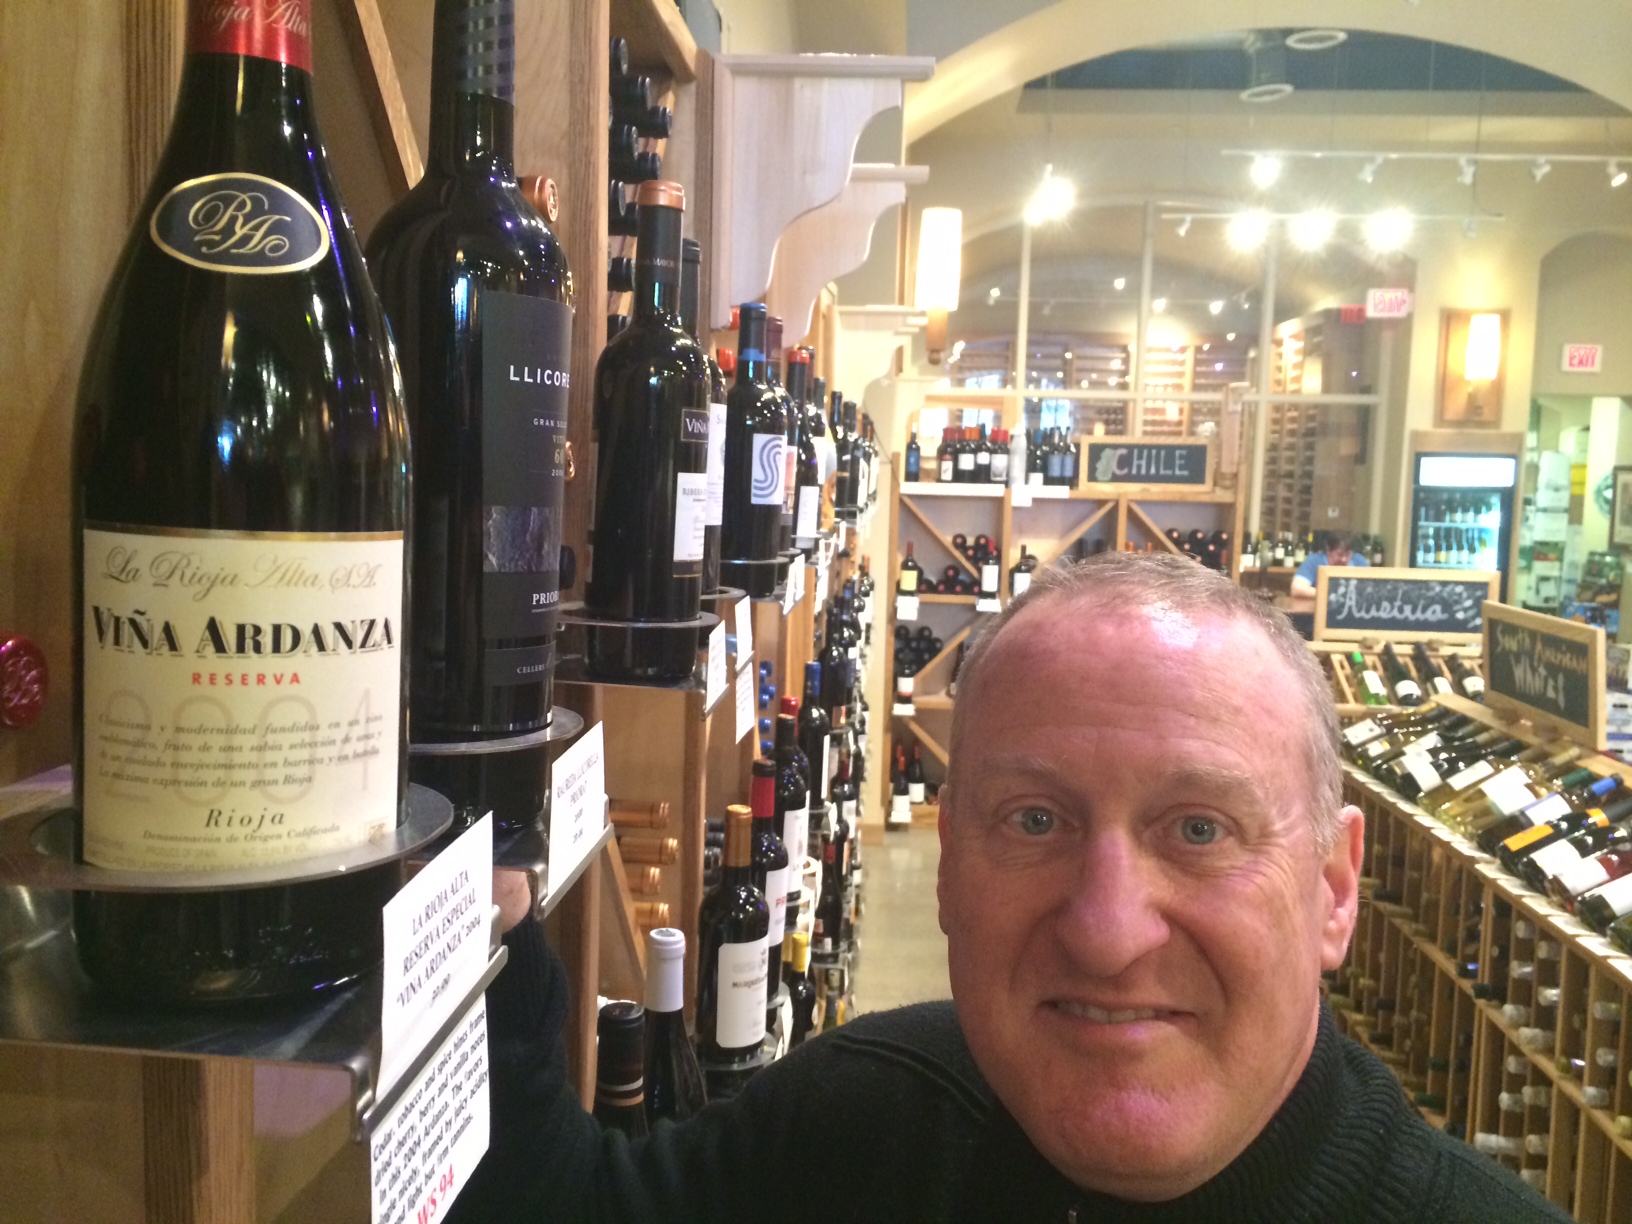 Jeff Barbour of New Canaan Wine Merchants with La Rioja Alta Viña Ardanza Reserva Especial 2004. Credit: Michael Dinan